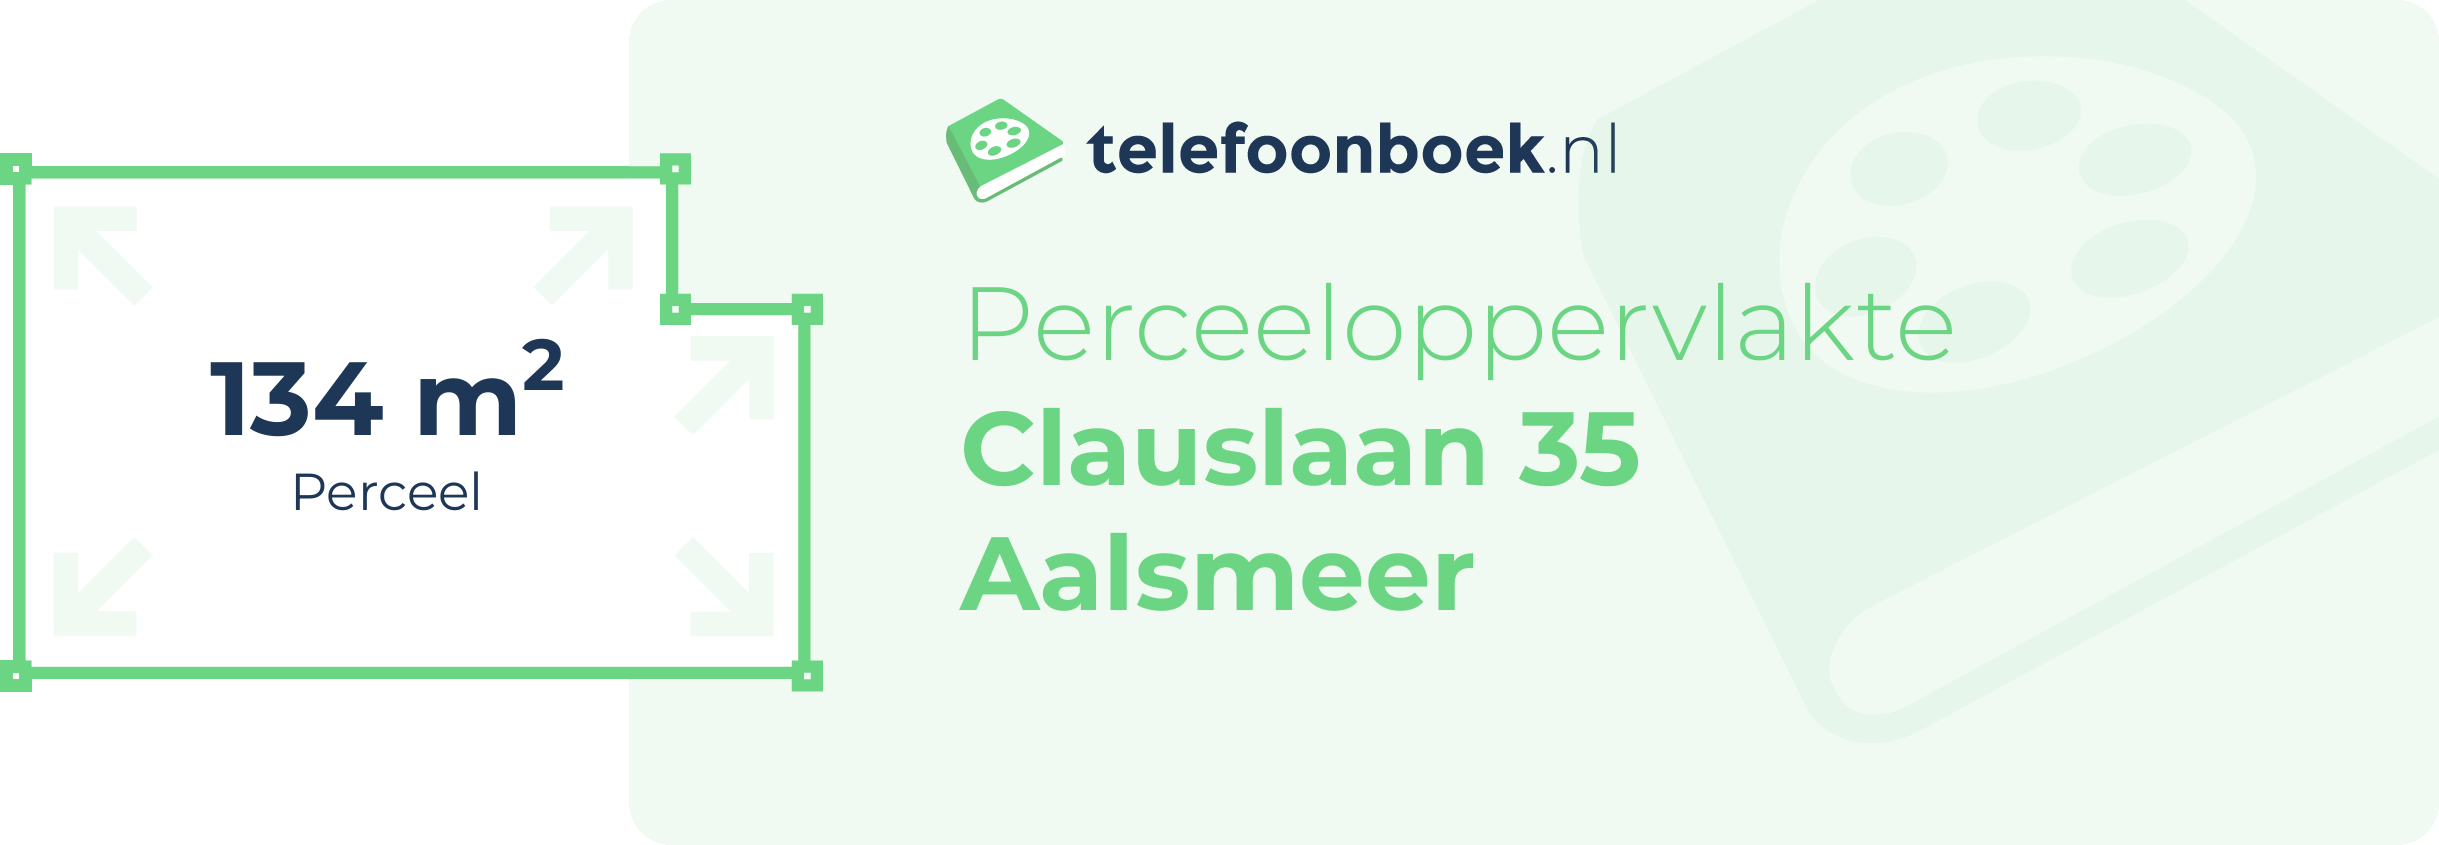 Perceeloppervlakte Clauslaan 35 Aalsmeer